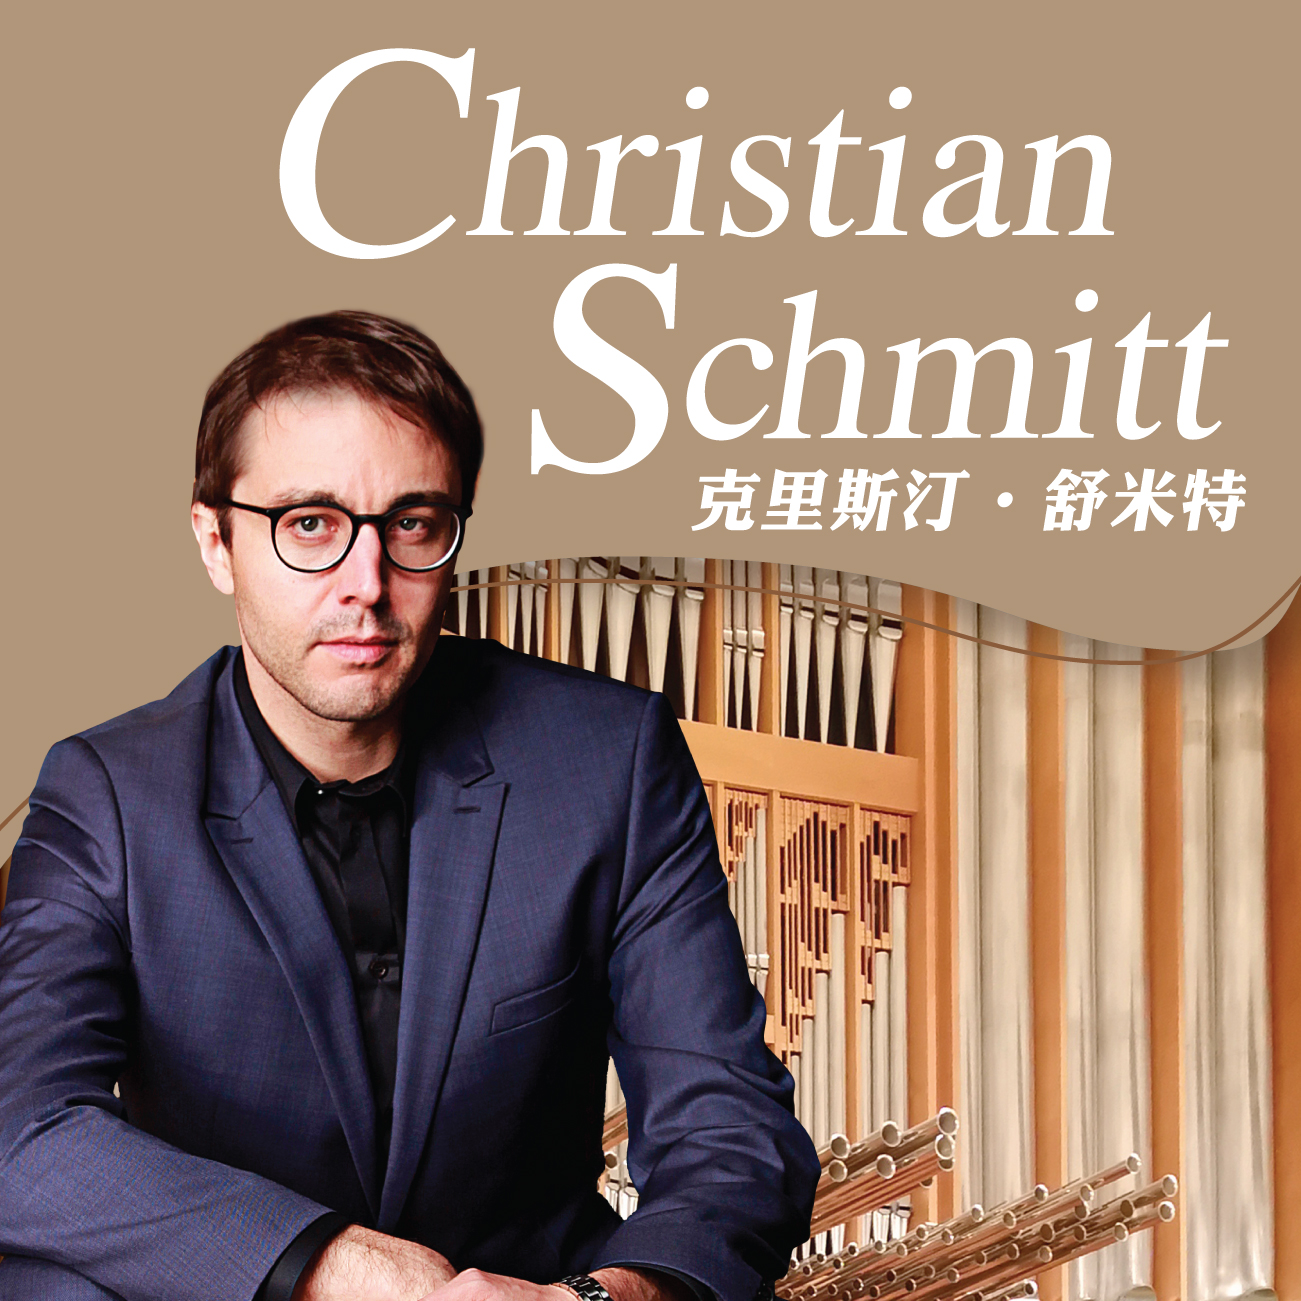 Organ Masterclass by Christian Schmitt (Conducted in English)